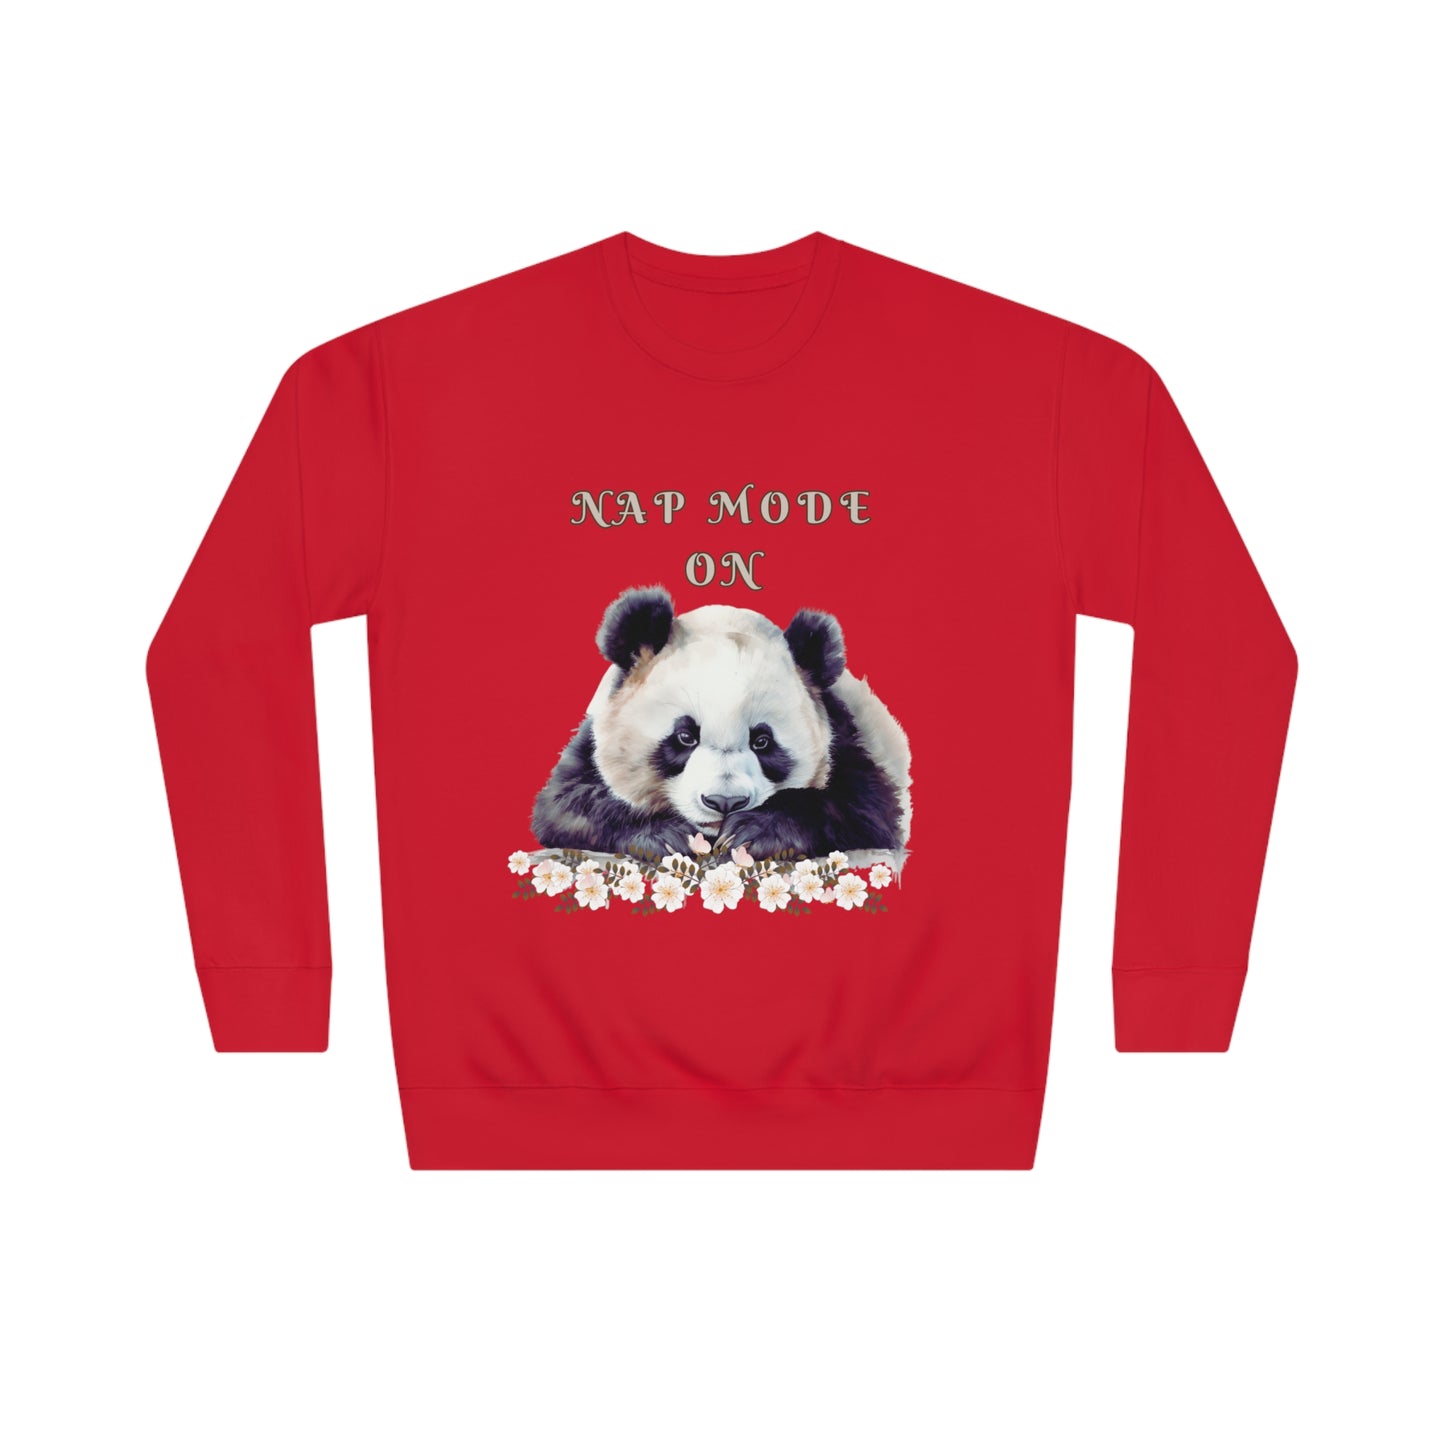 Lazy Panda Nap Mode Sweatshirt | Embrace Cozy Relaxation | Panda Lover Gift - Cozy Sweatshirt Sweatshirt Team Red S 